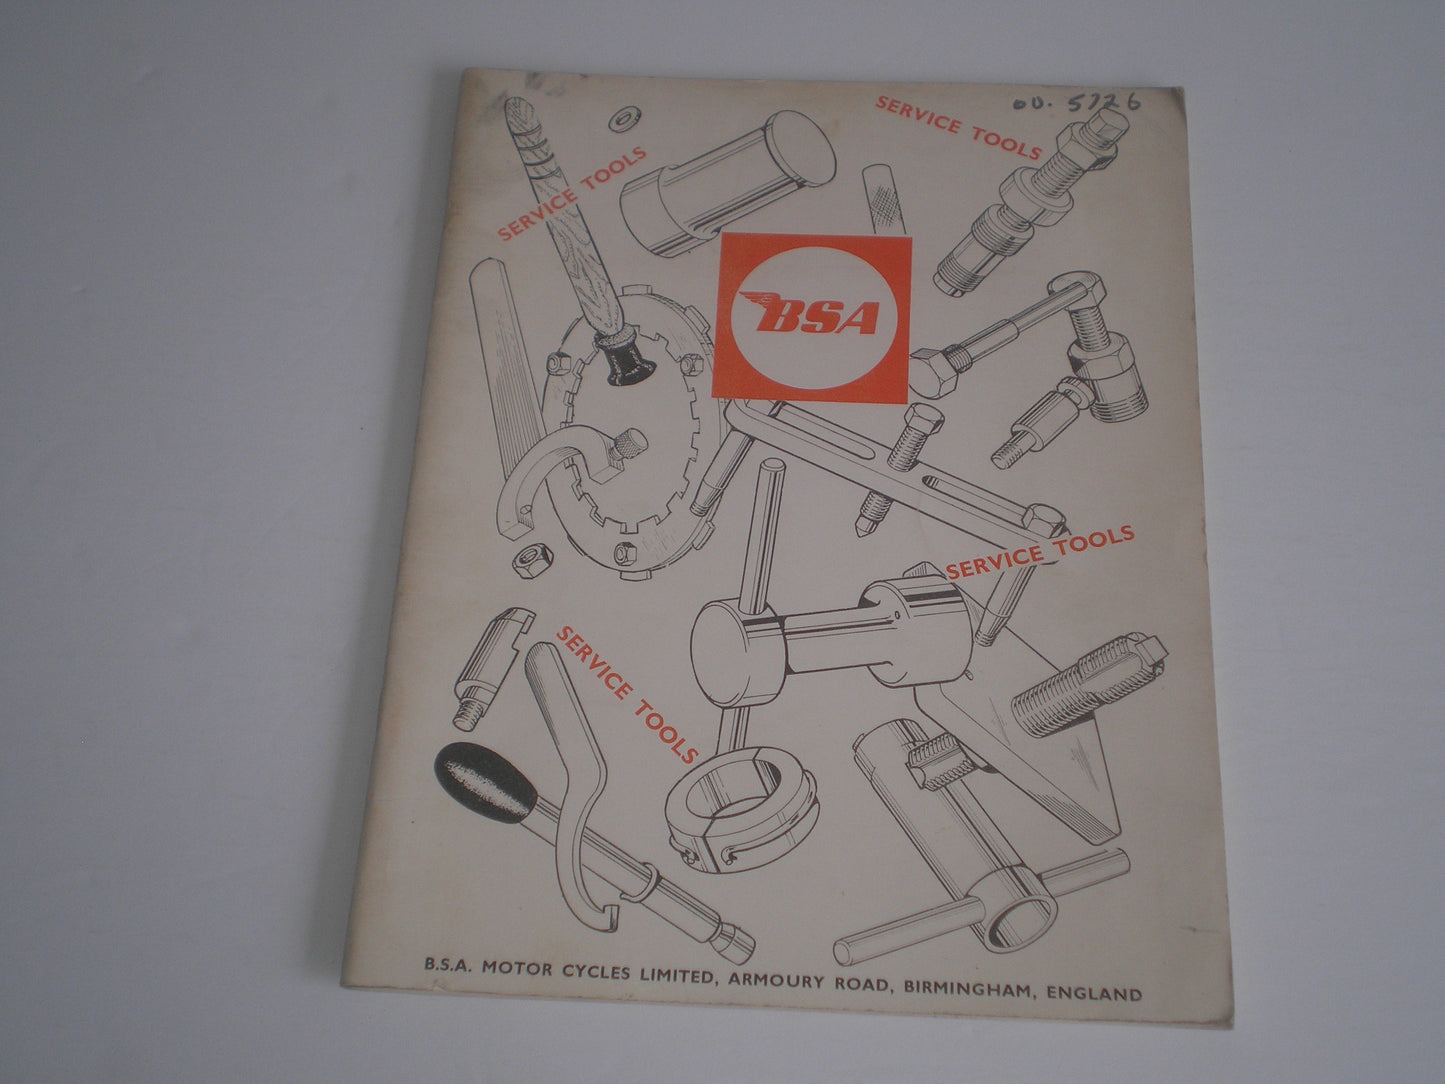 BSA 1970  Service Tools Catalogue  00-5726   #E118